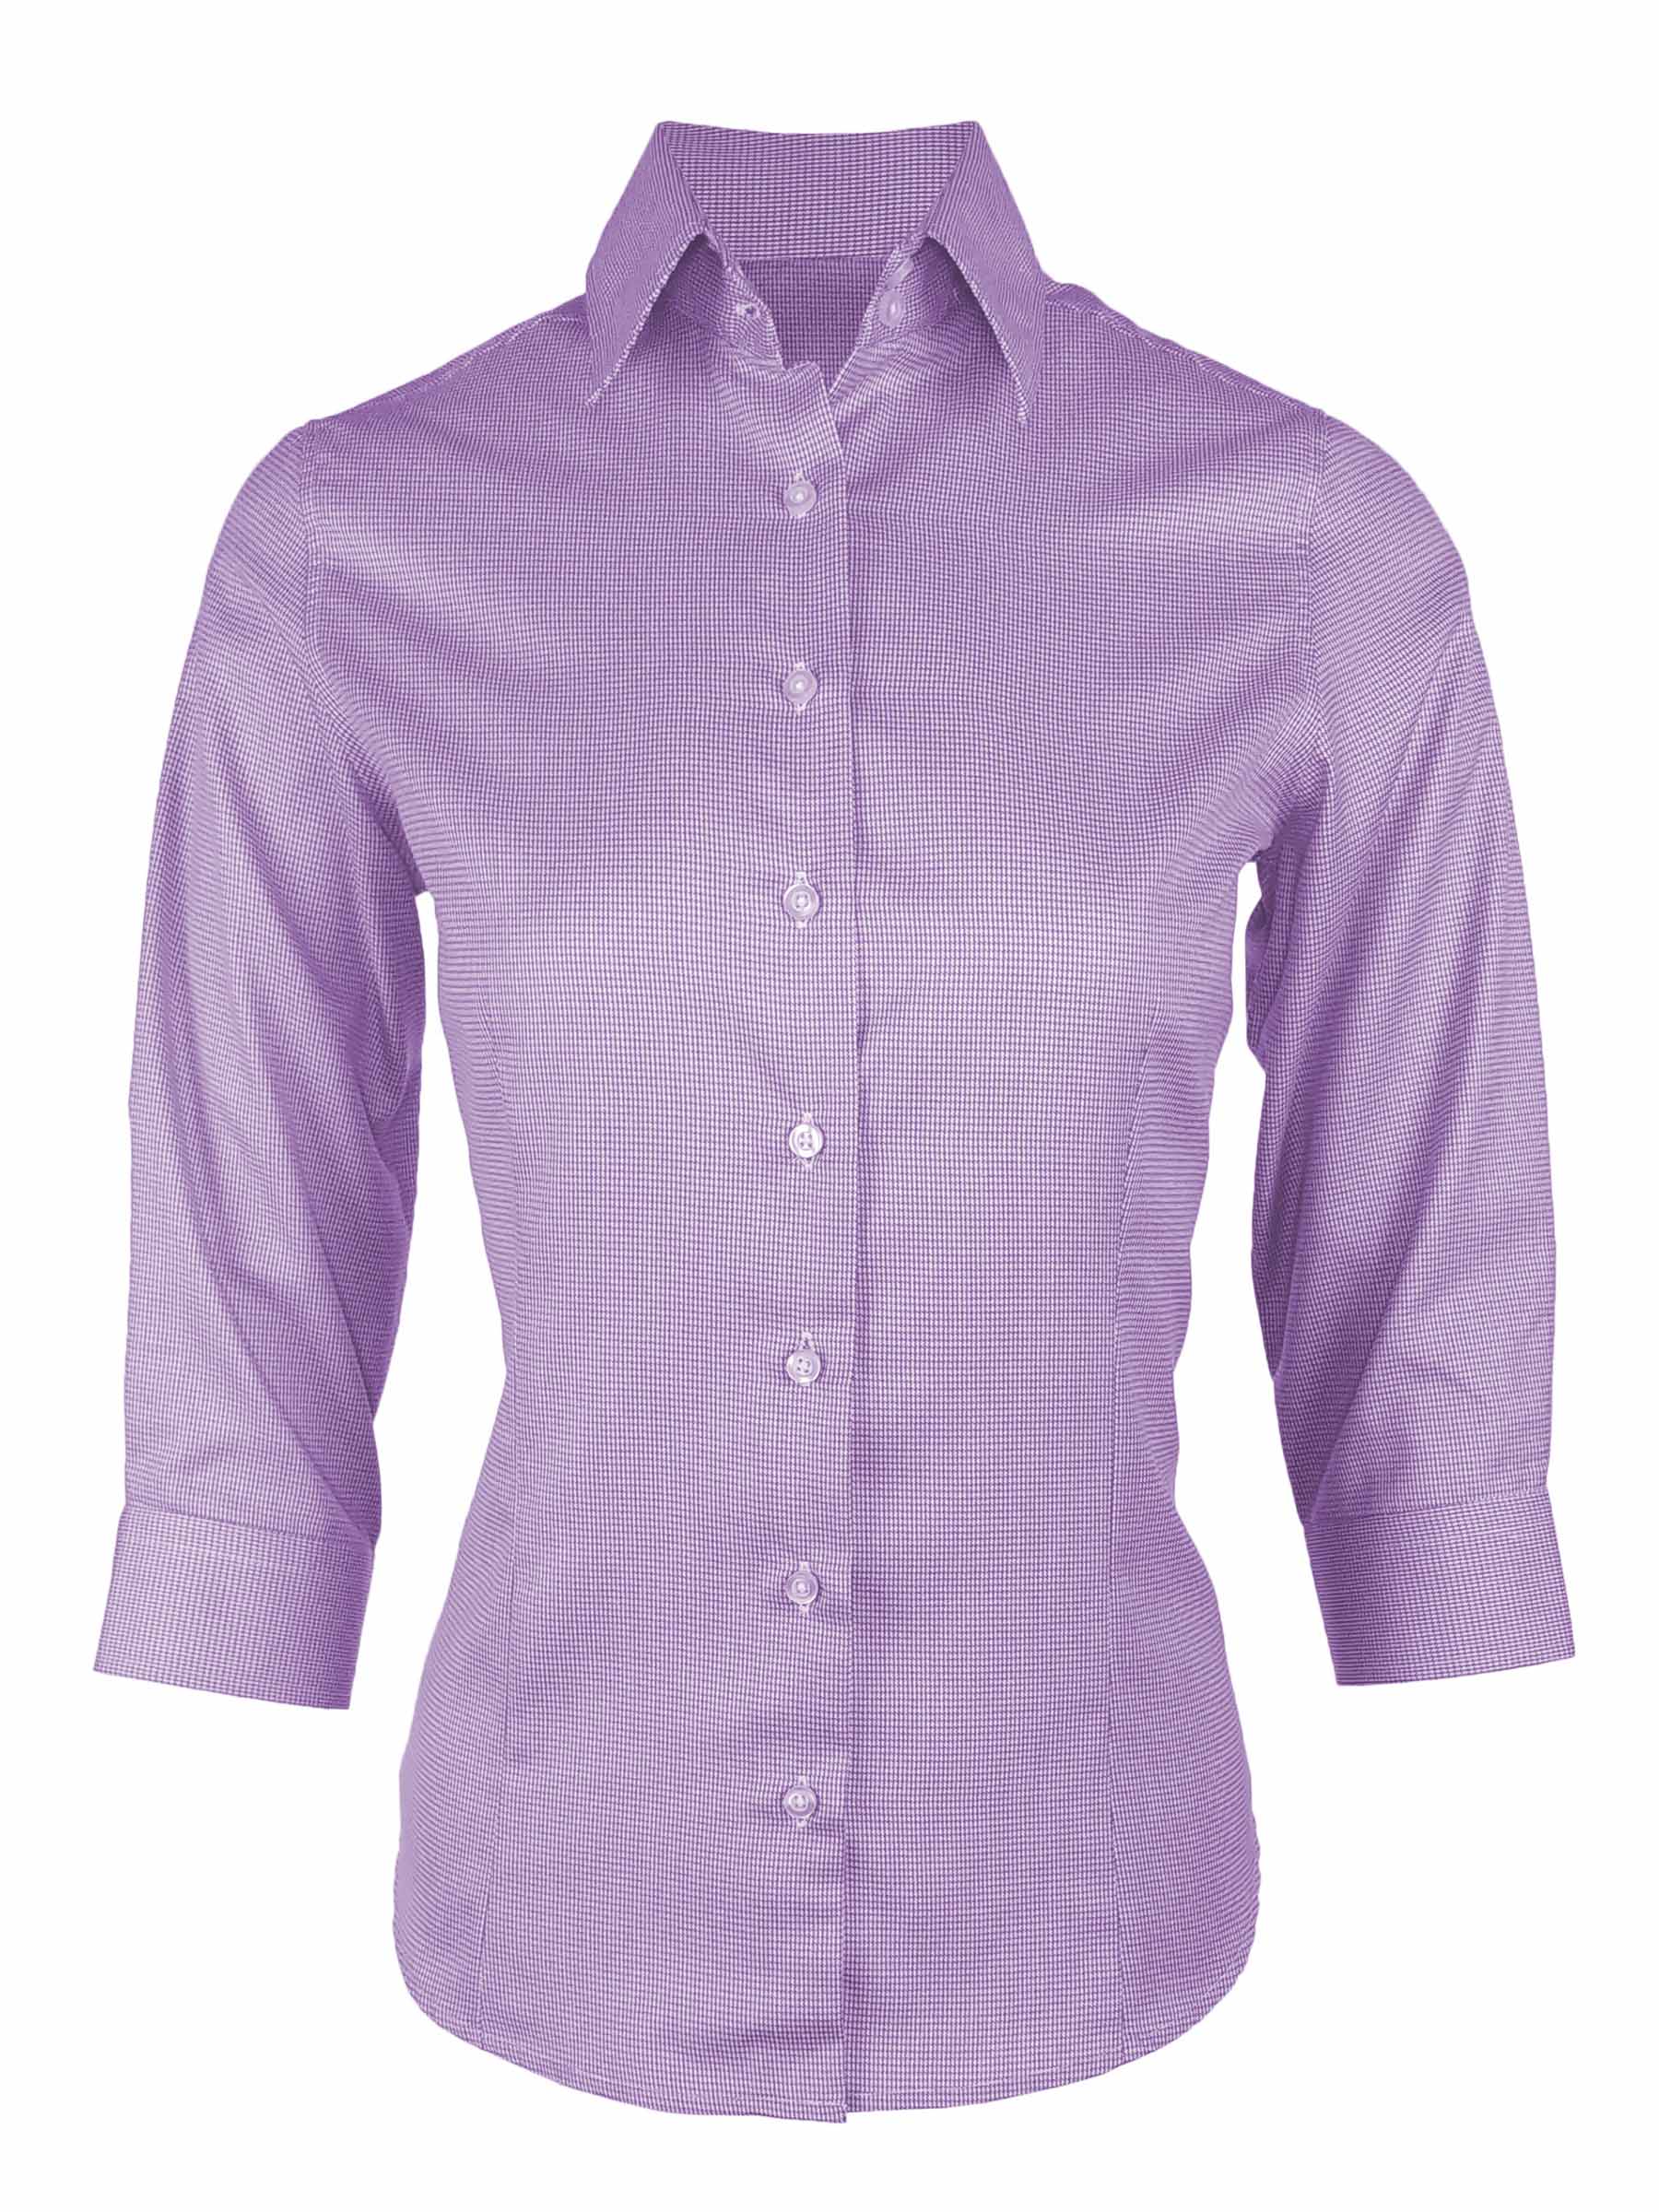 Women's Wilson Shirt - Purple Houndstooth Three Quarter - Uniform Edit